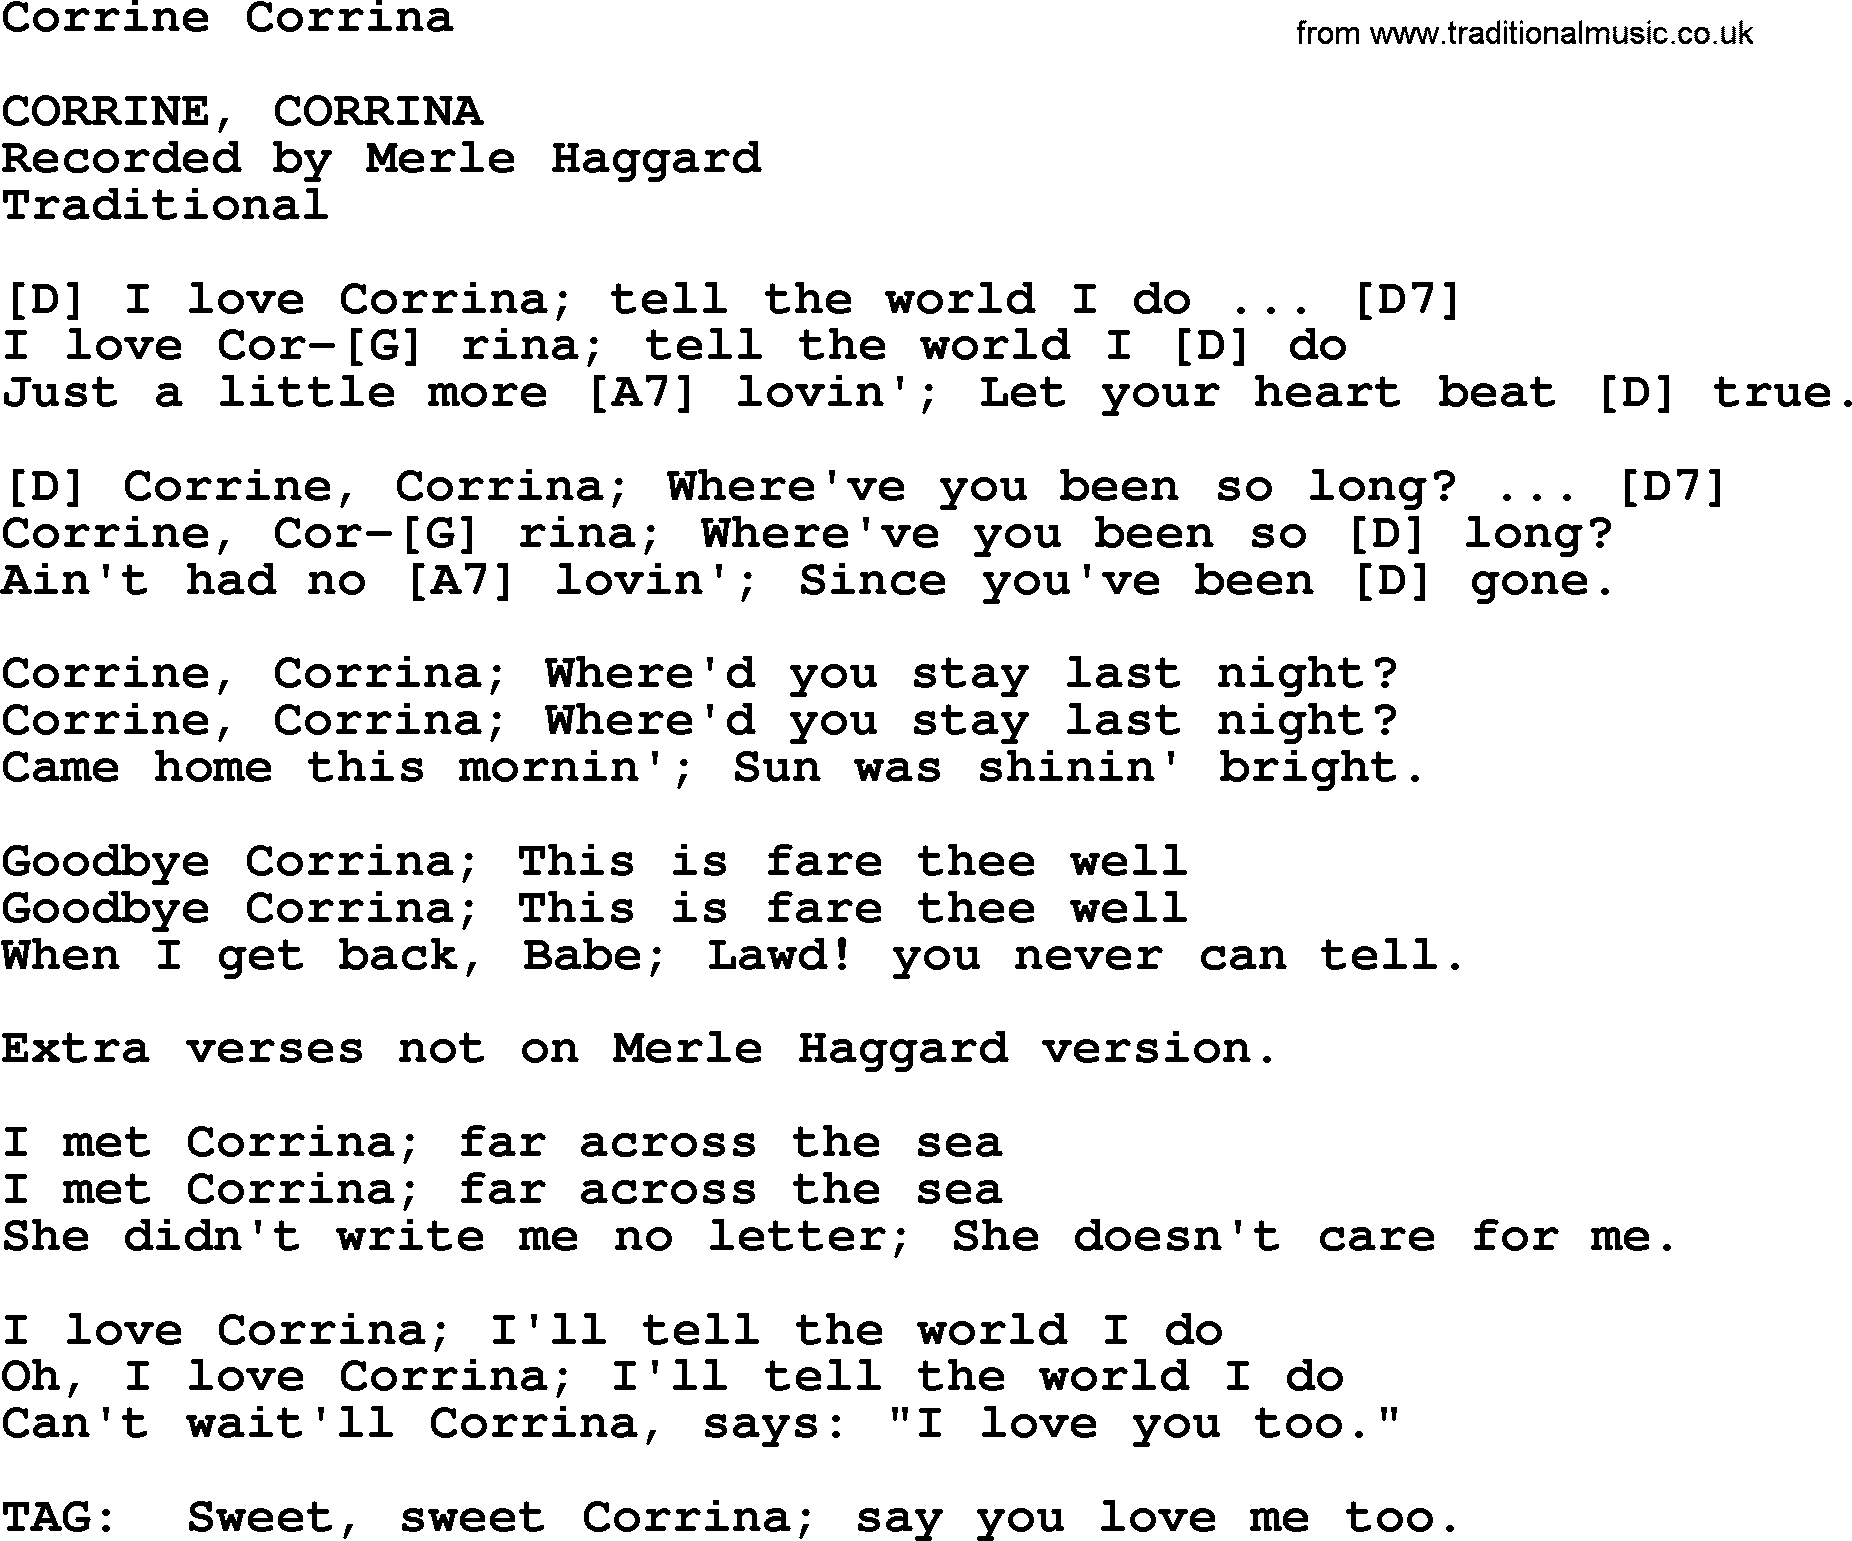 Bluegrass song: Corrine Corrina, lyrics and chords